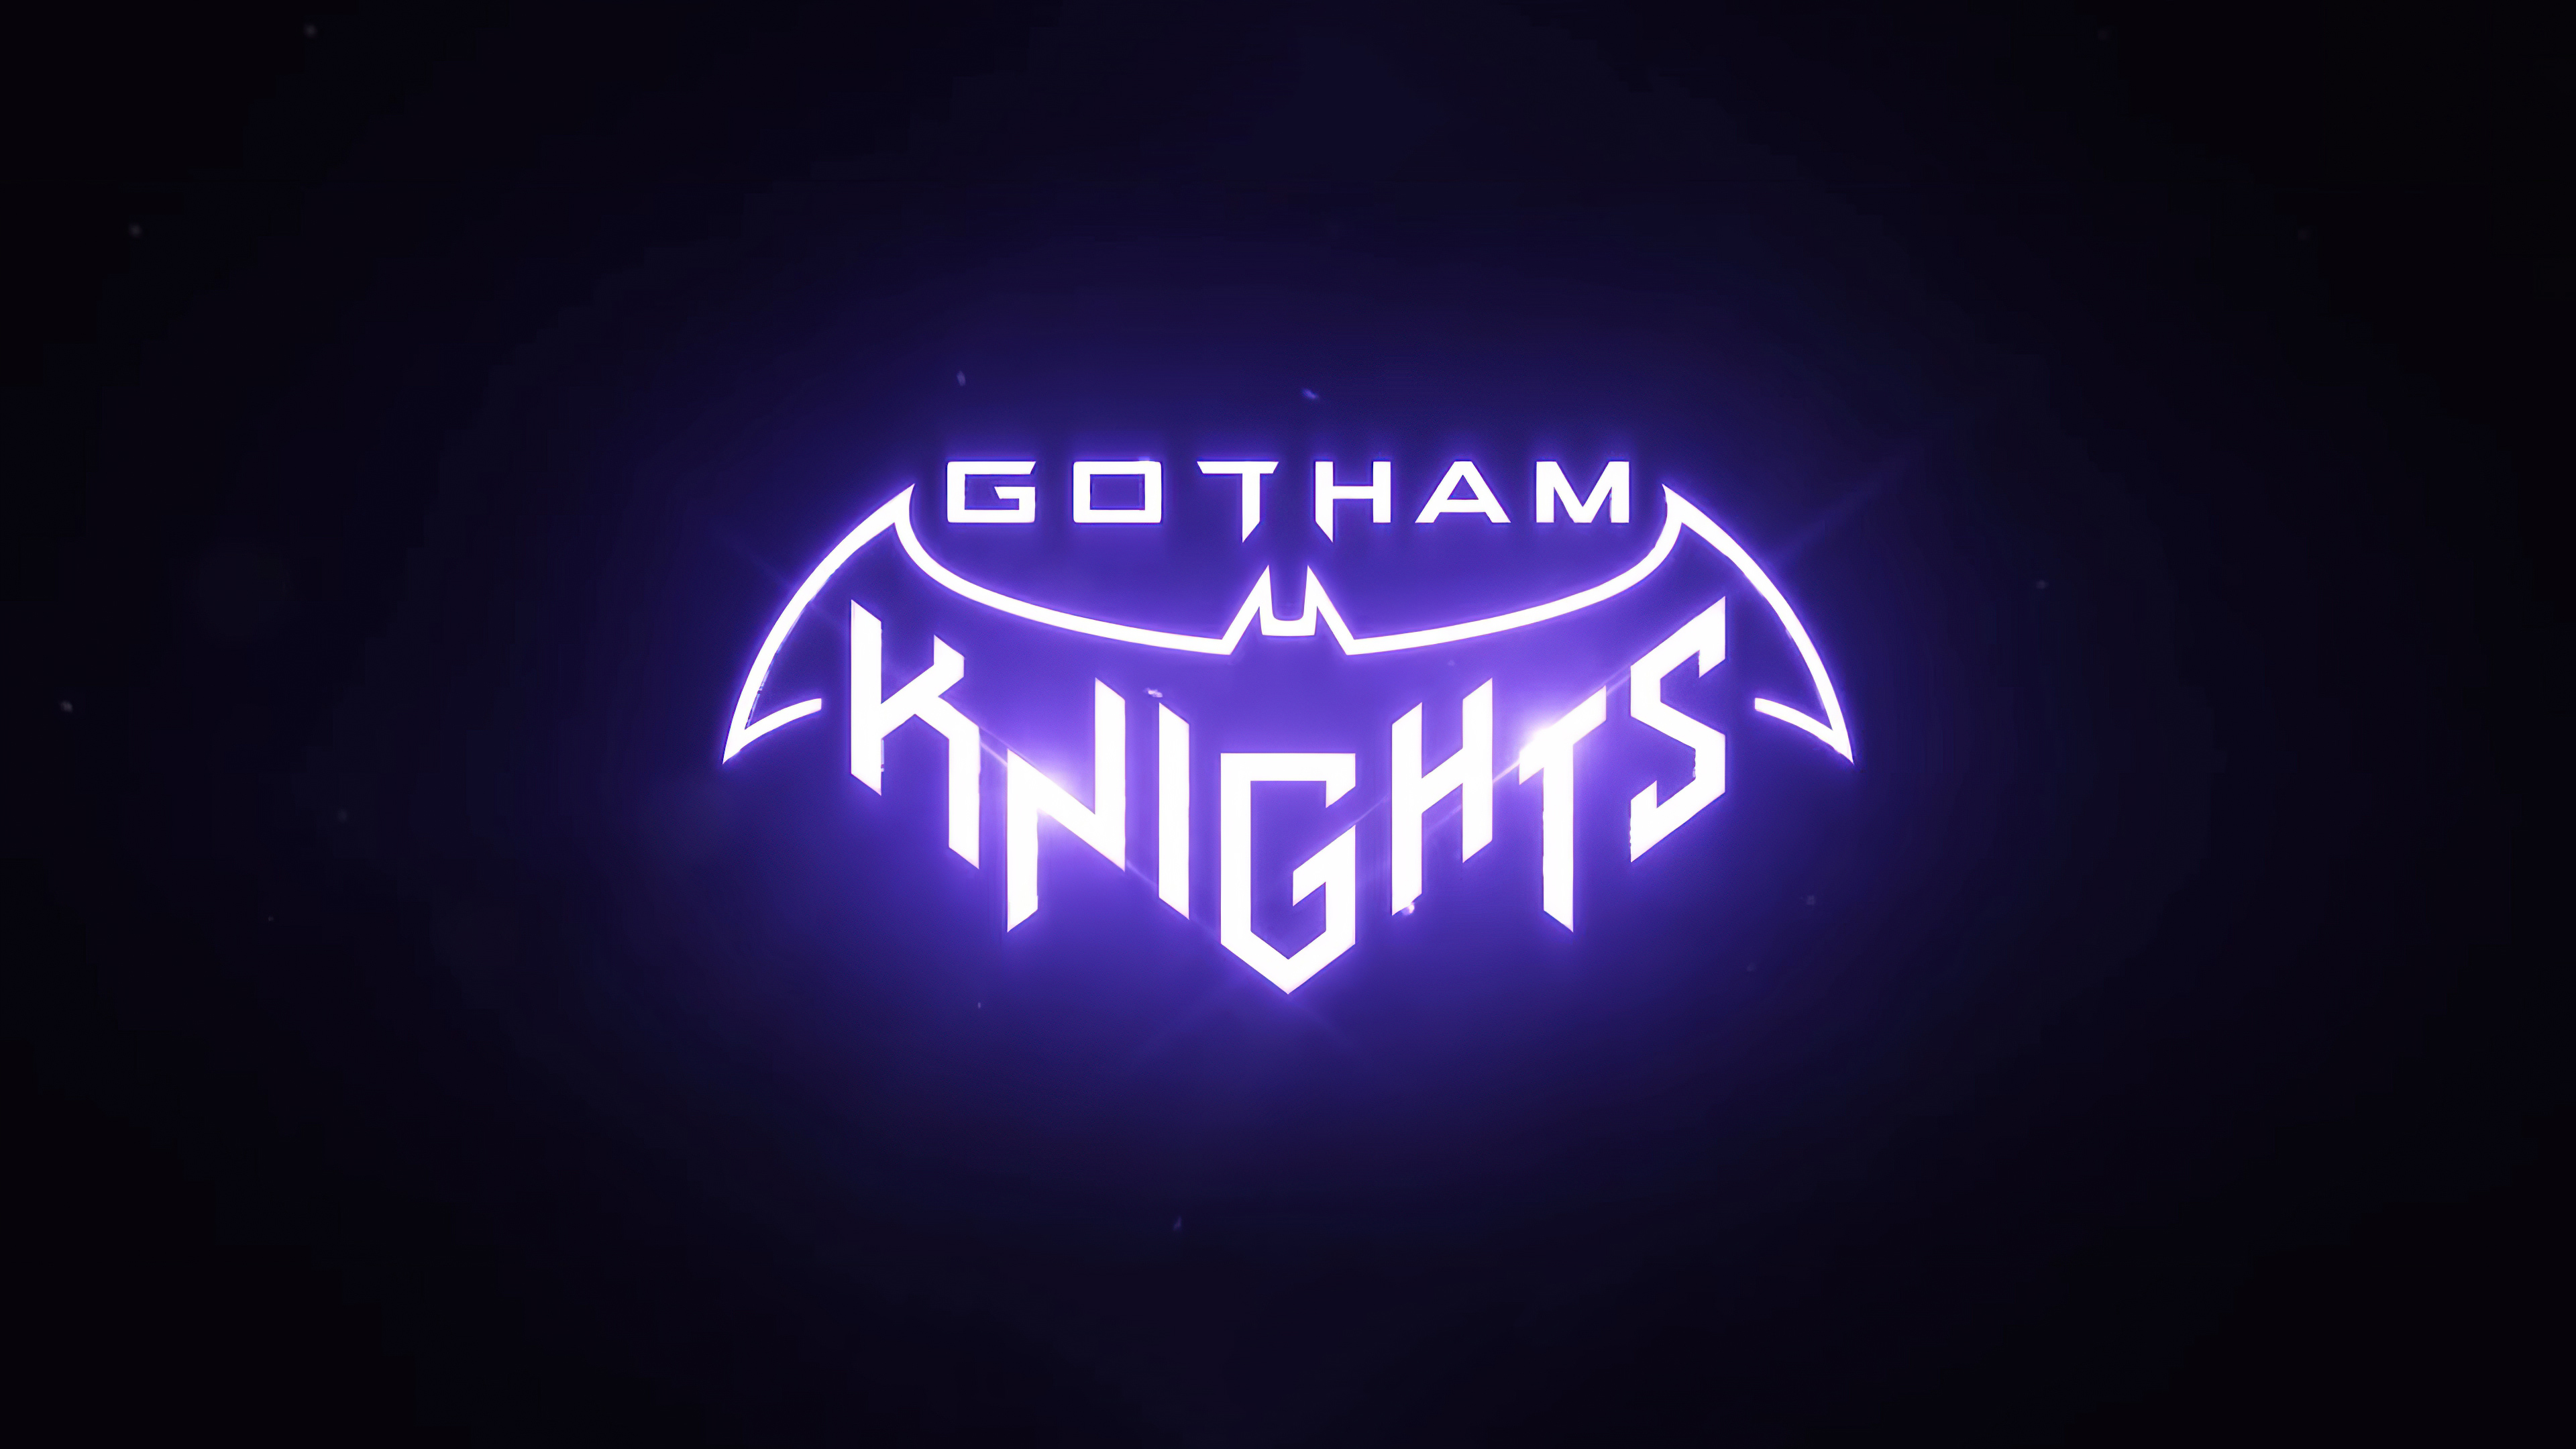 gotham knights xbox download free